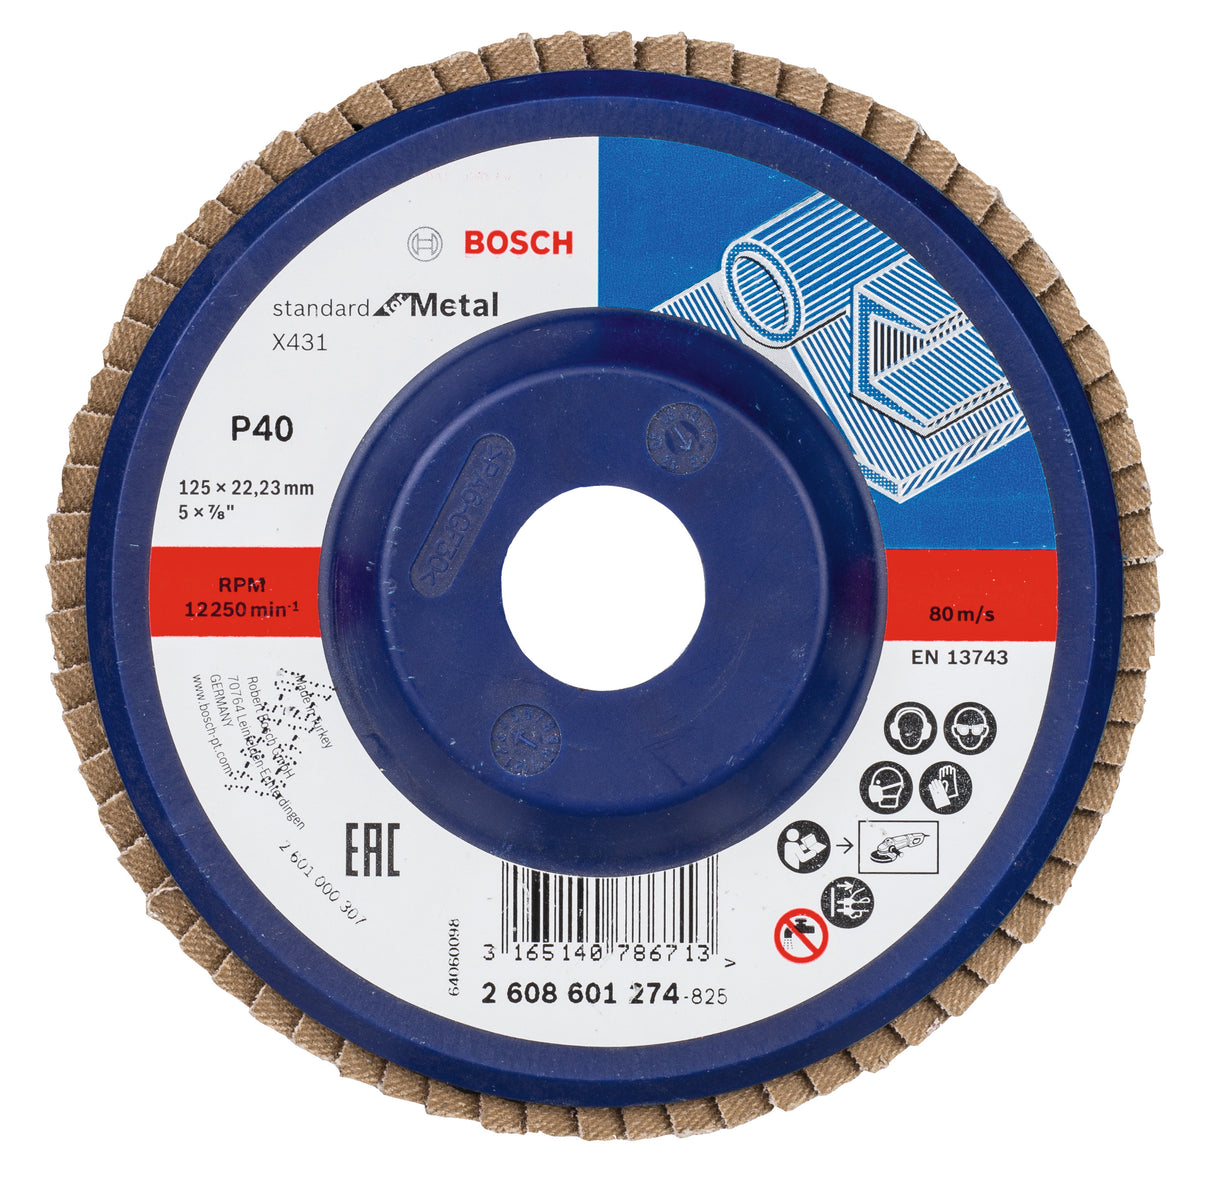 Bosch Professional X431 Flap Disc - Standard for Metal - 125mm x 22.23mm - G40